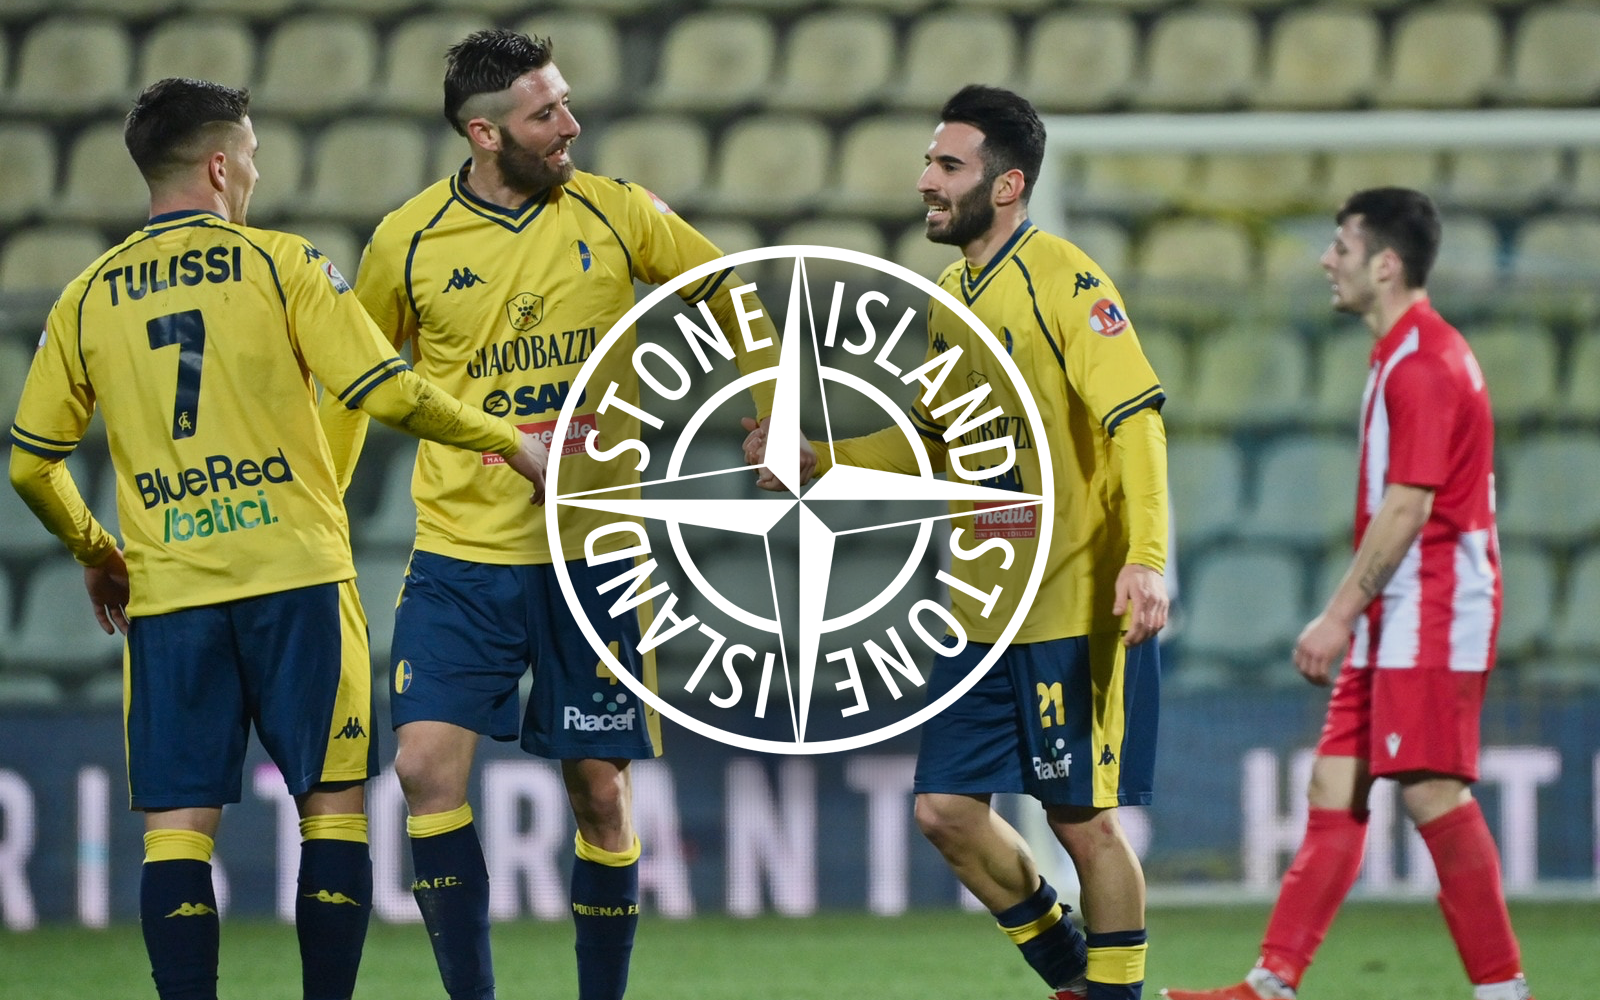 Stone Island Set To Buy Stake In Italian Football Club - SoccerBible